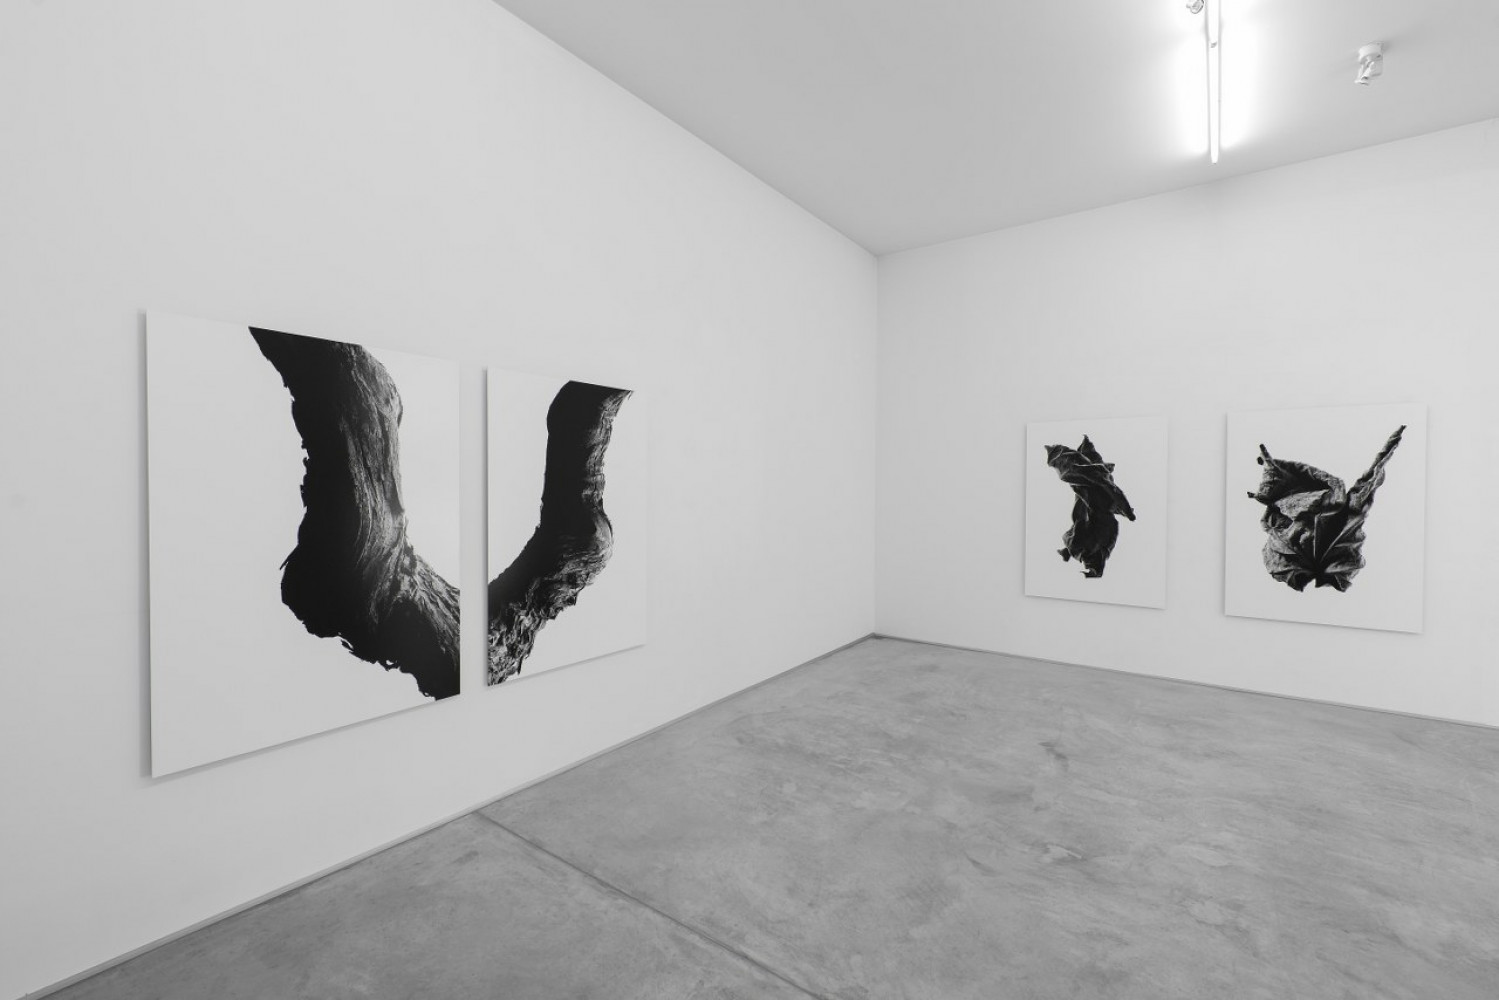 Marco D'Anna, ‘Oltre’, Installation view, Buchmann Agra, 2016